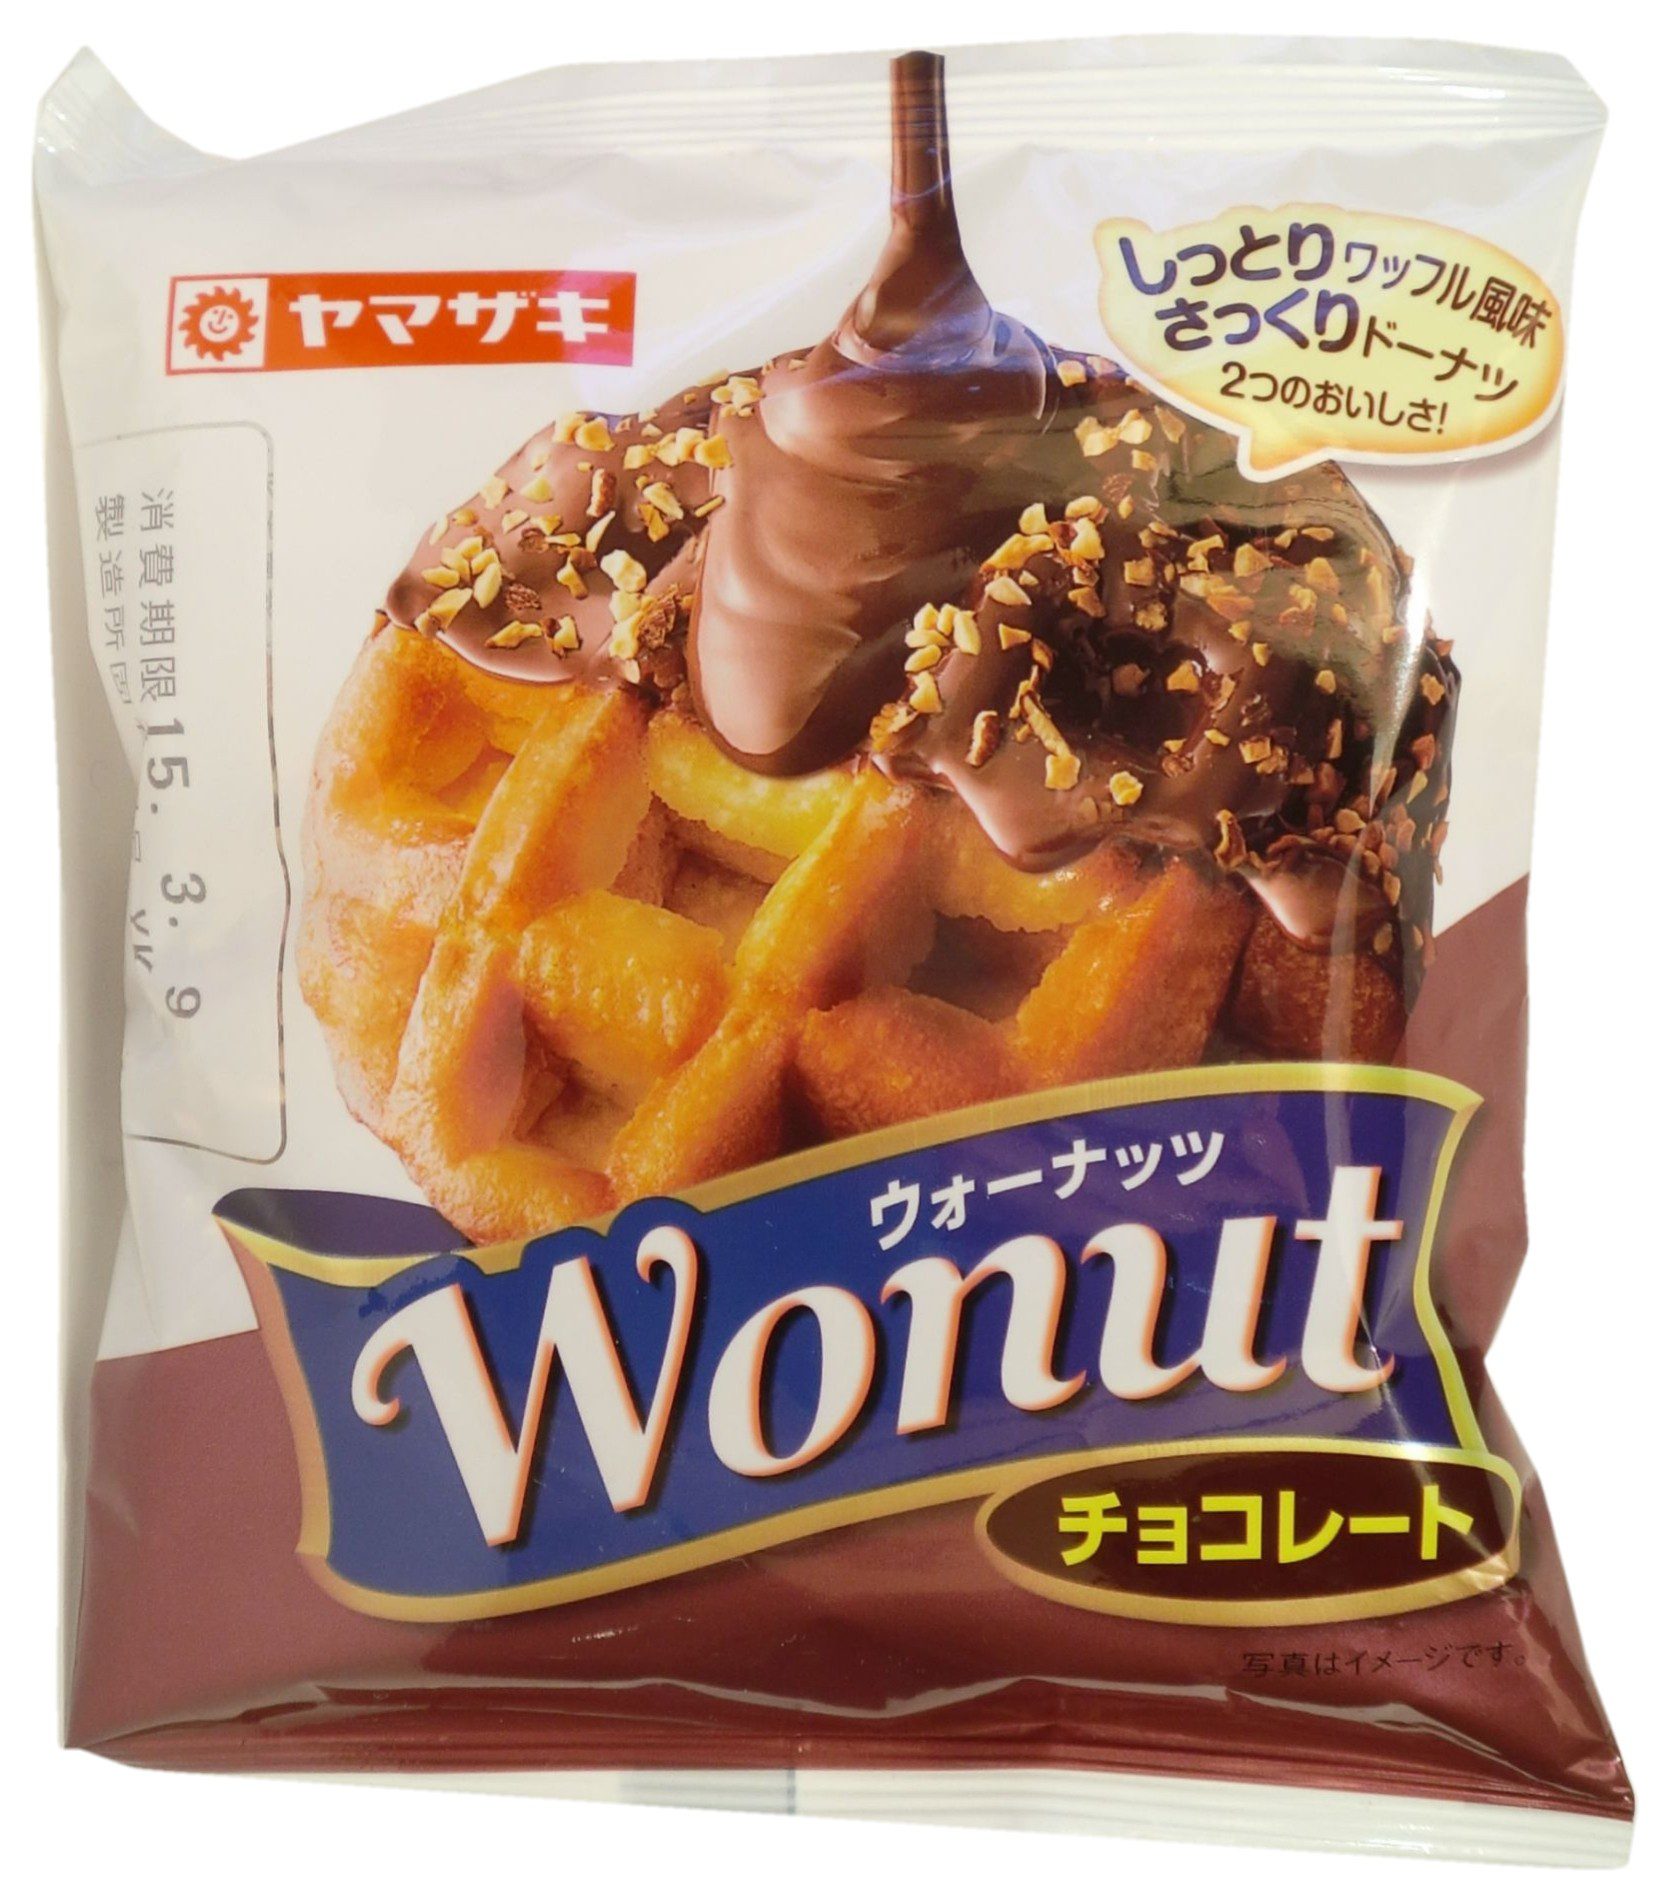 Yamazaki-Wonut-Chocolate-Waffle-Doughnut